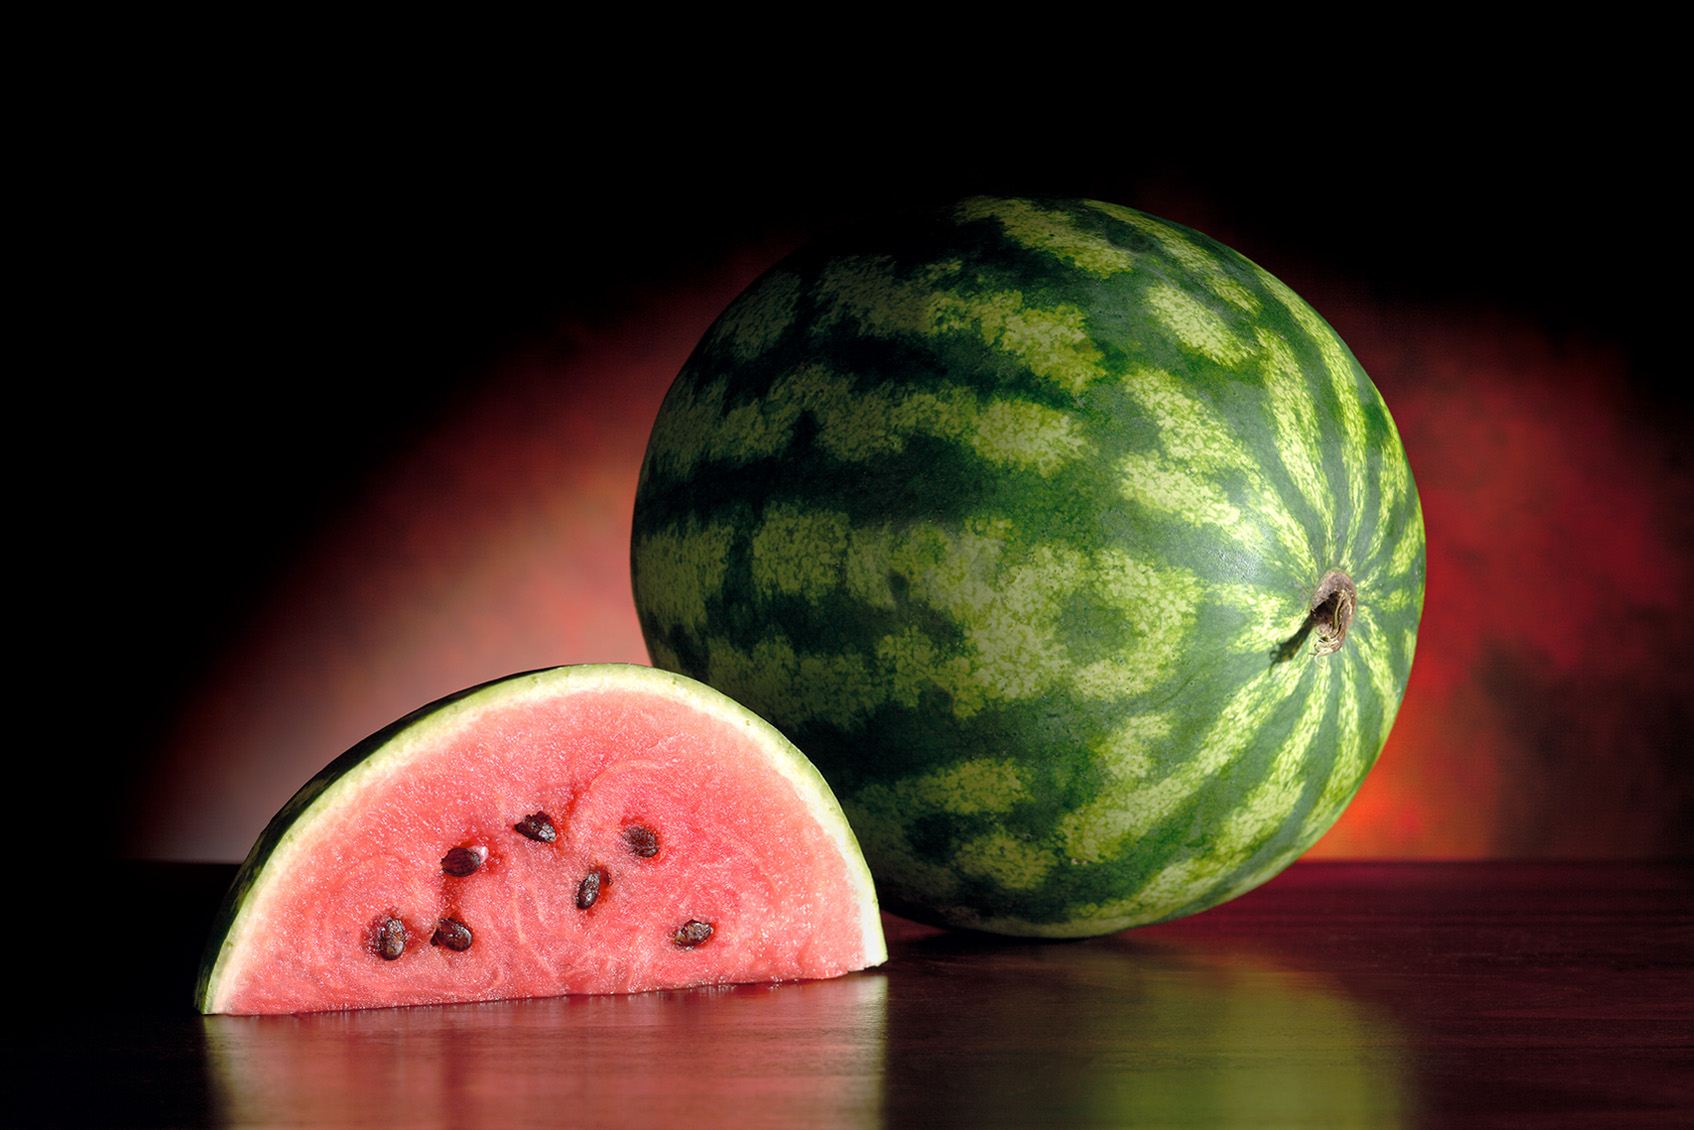 editorial - fruits - wassermelone